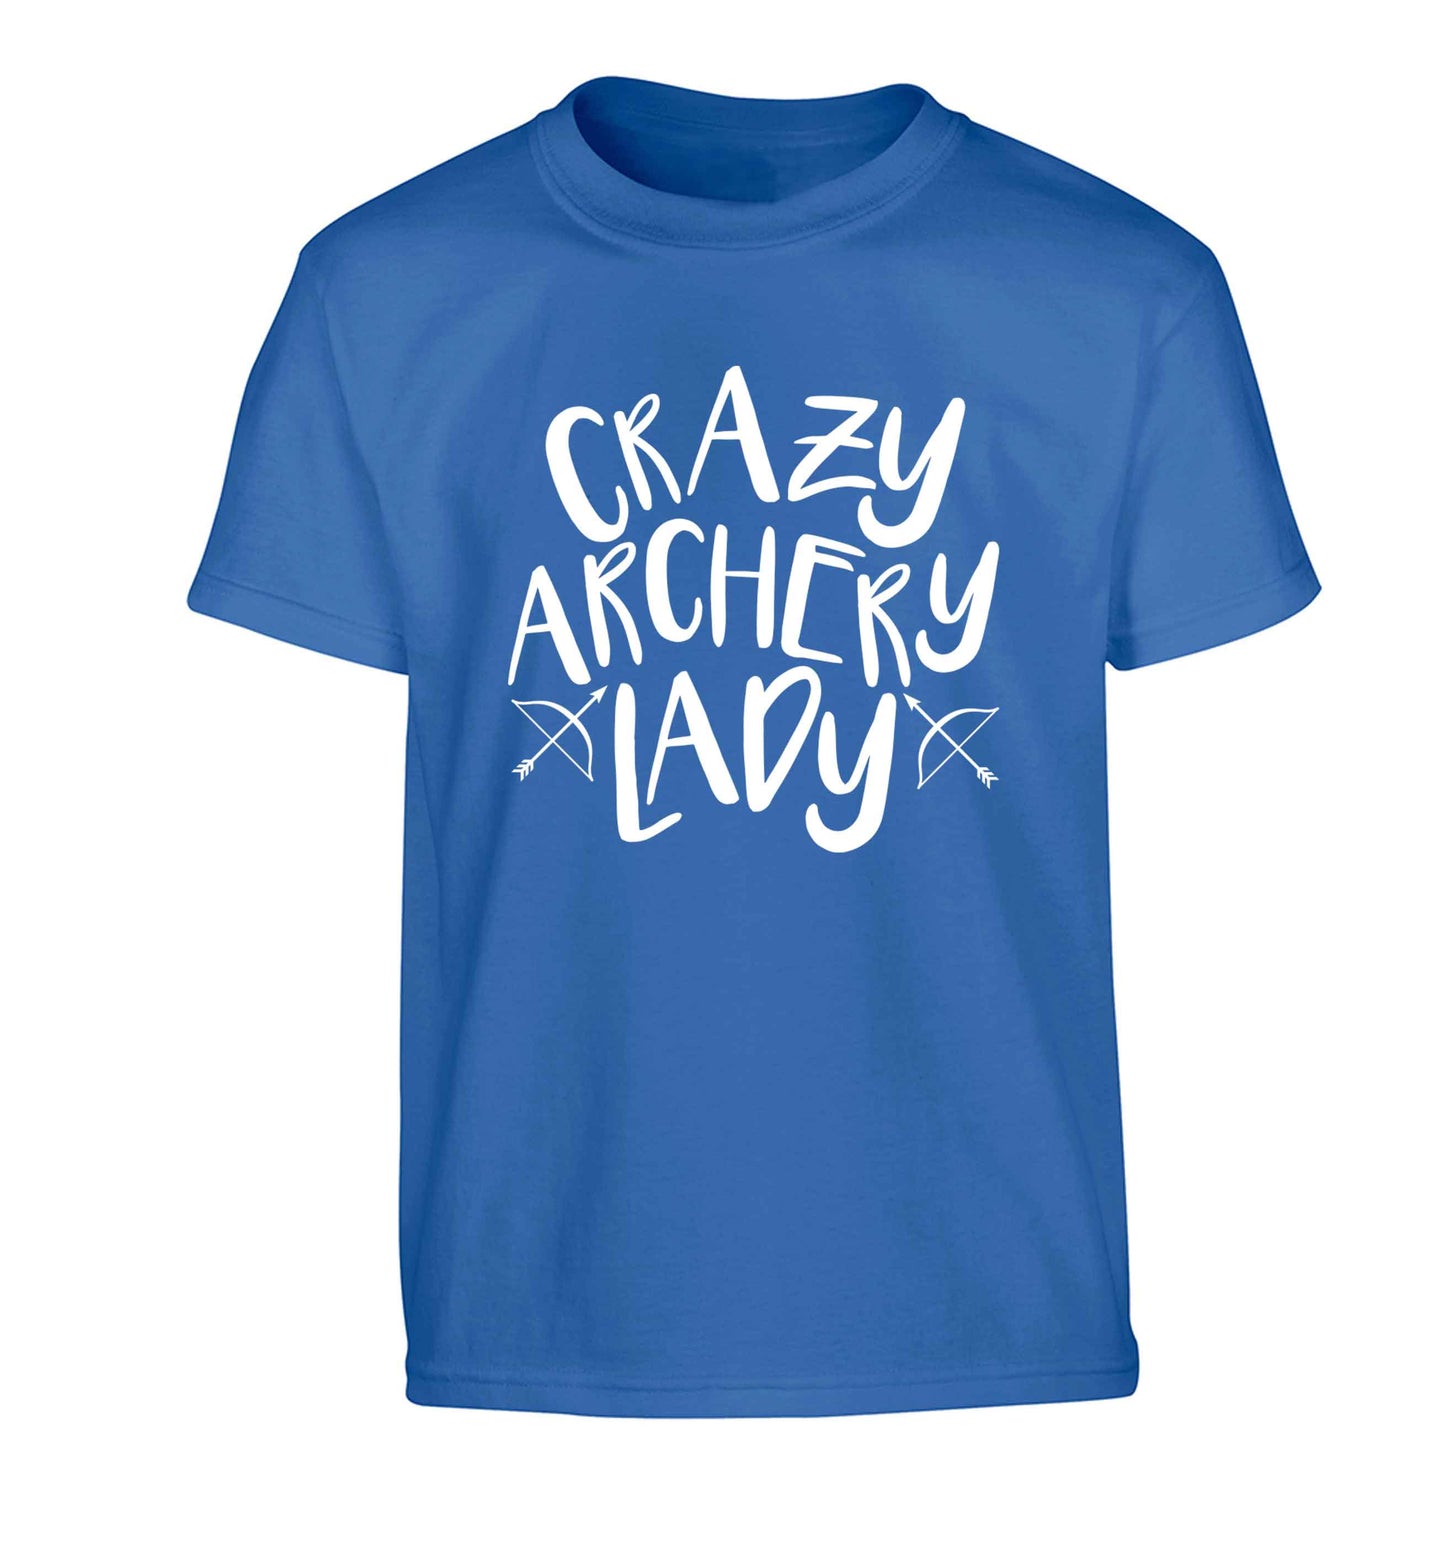 Crazy archery lady Children's blue Tshirt 12-13 Years